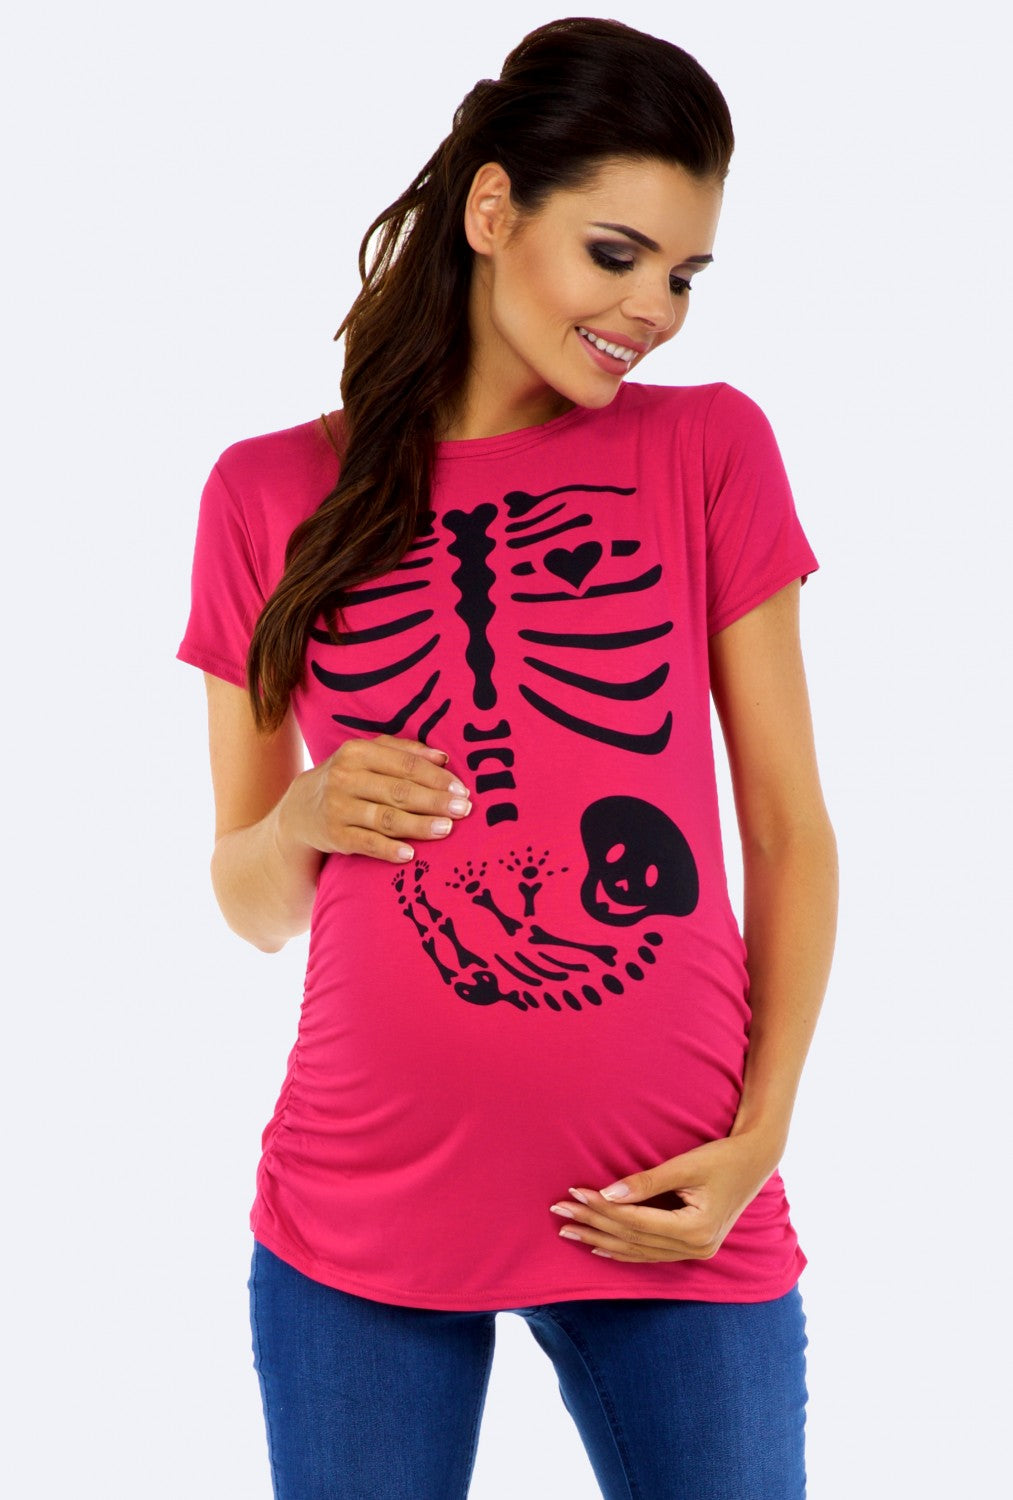 Baby Skeleton Maternity Top